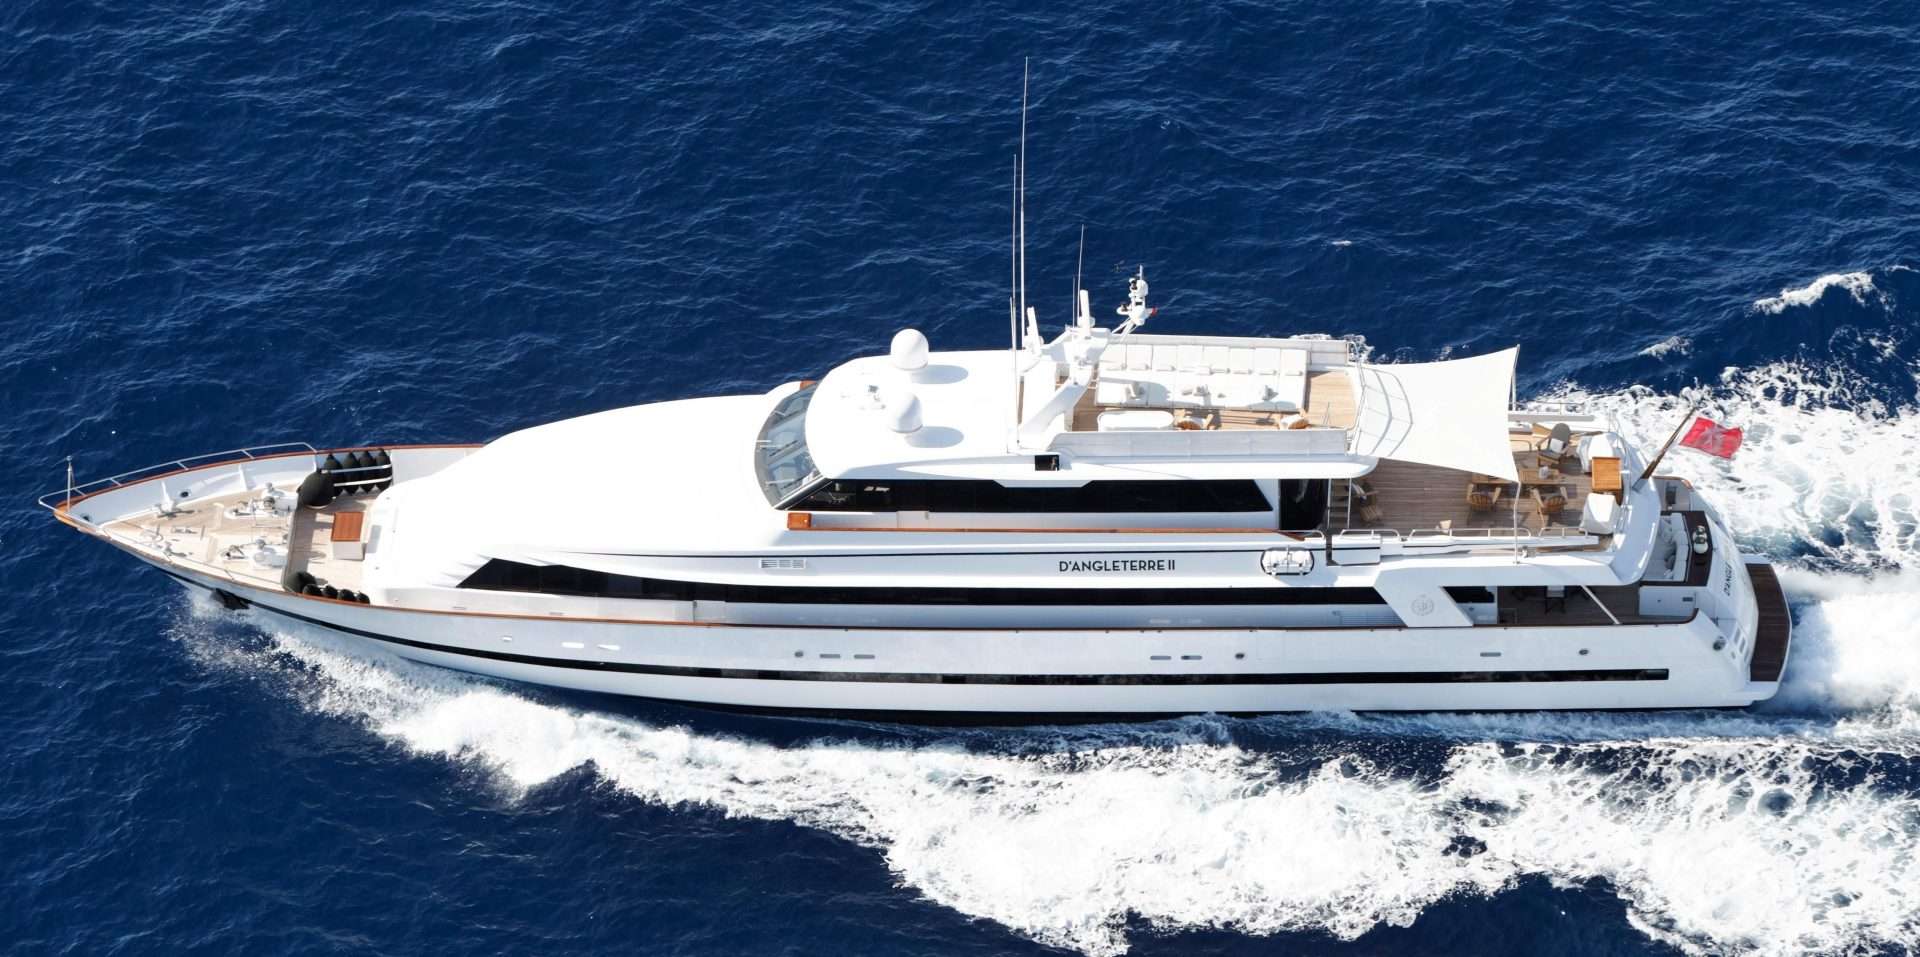 SEA LADY II - Yacht Charter Murcia & Boat hire in W. Med -Naples/Sicily, W. Med -Riviera/Cors/Sard., W. Med - Spain/Balearics 1